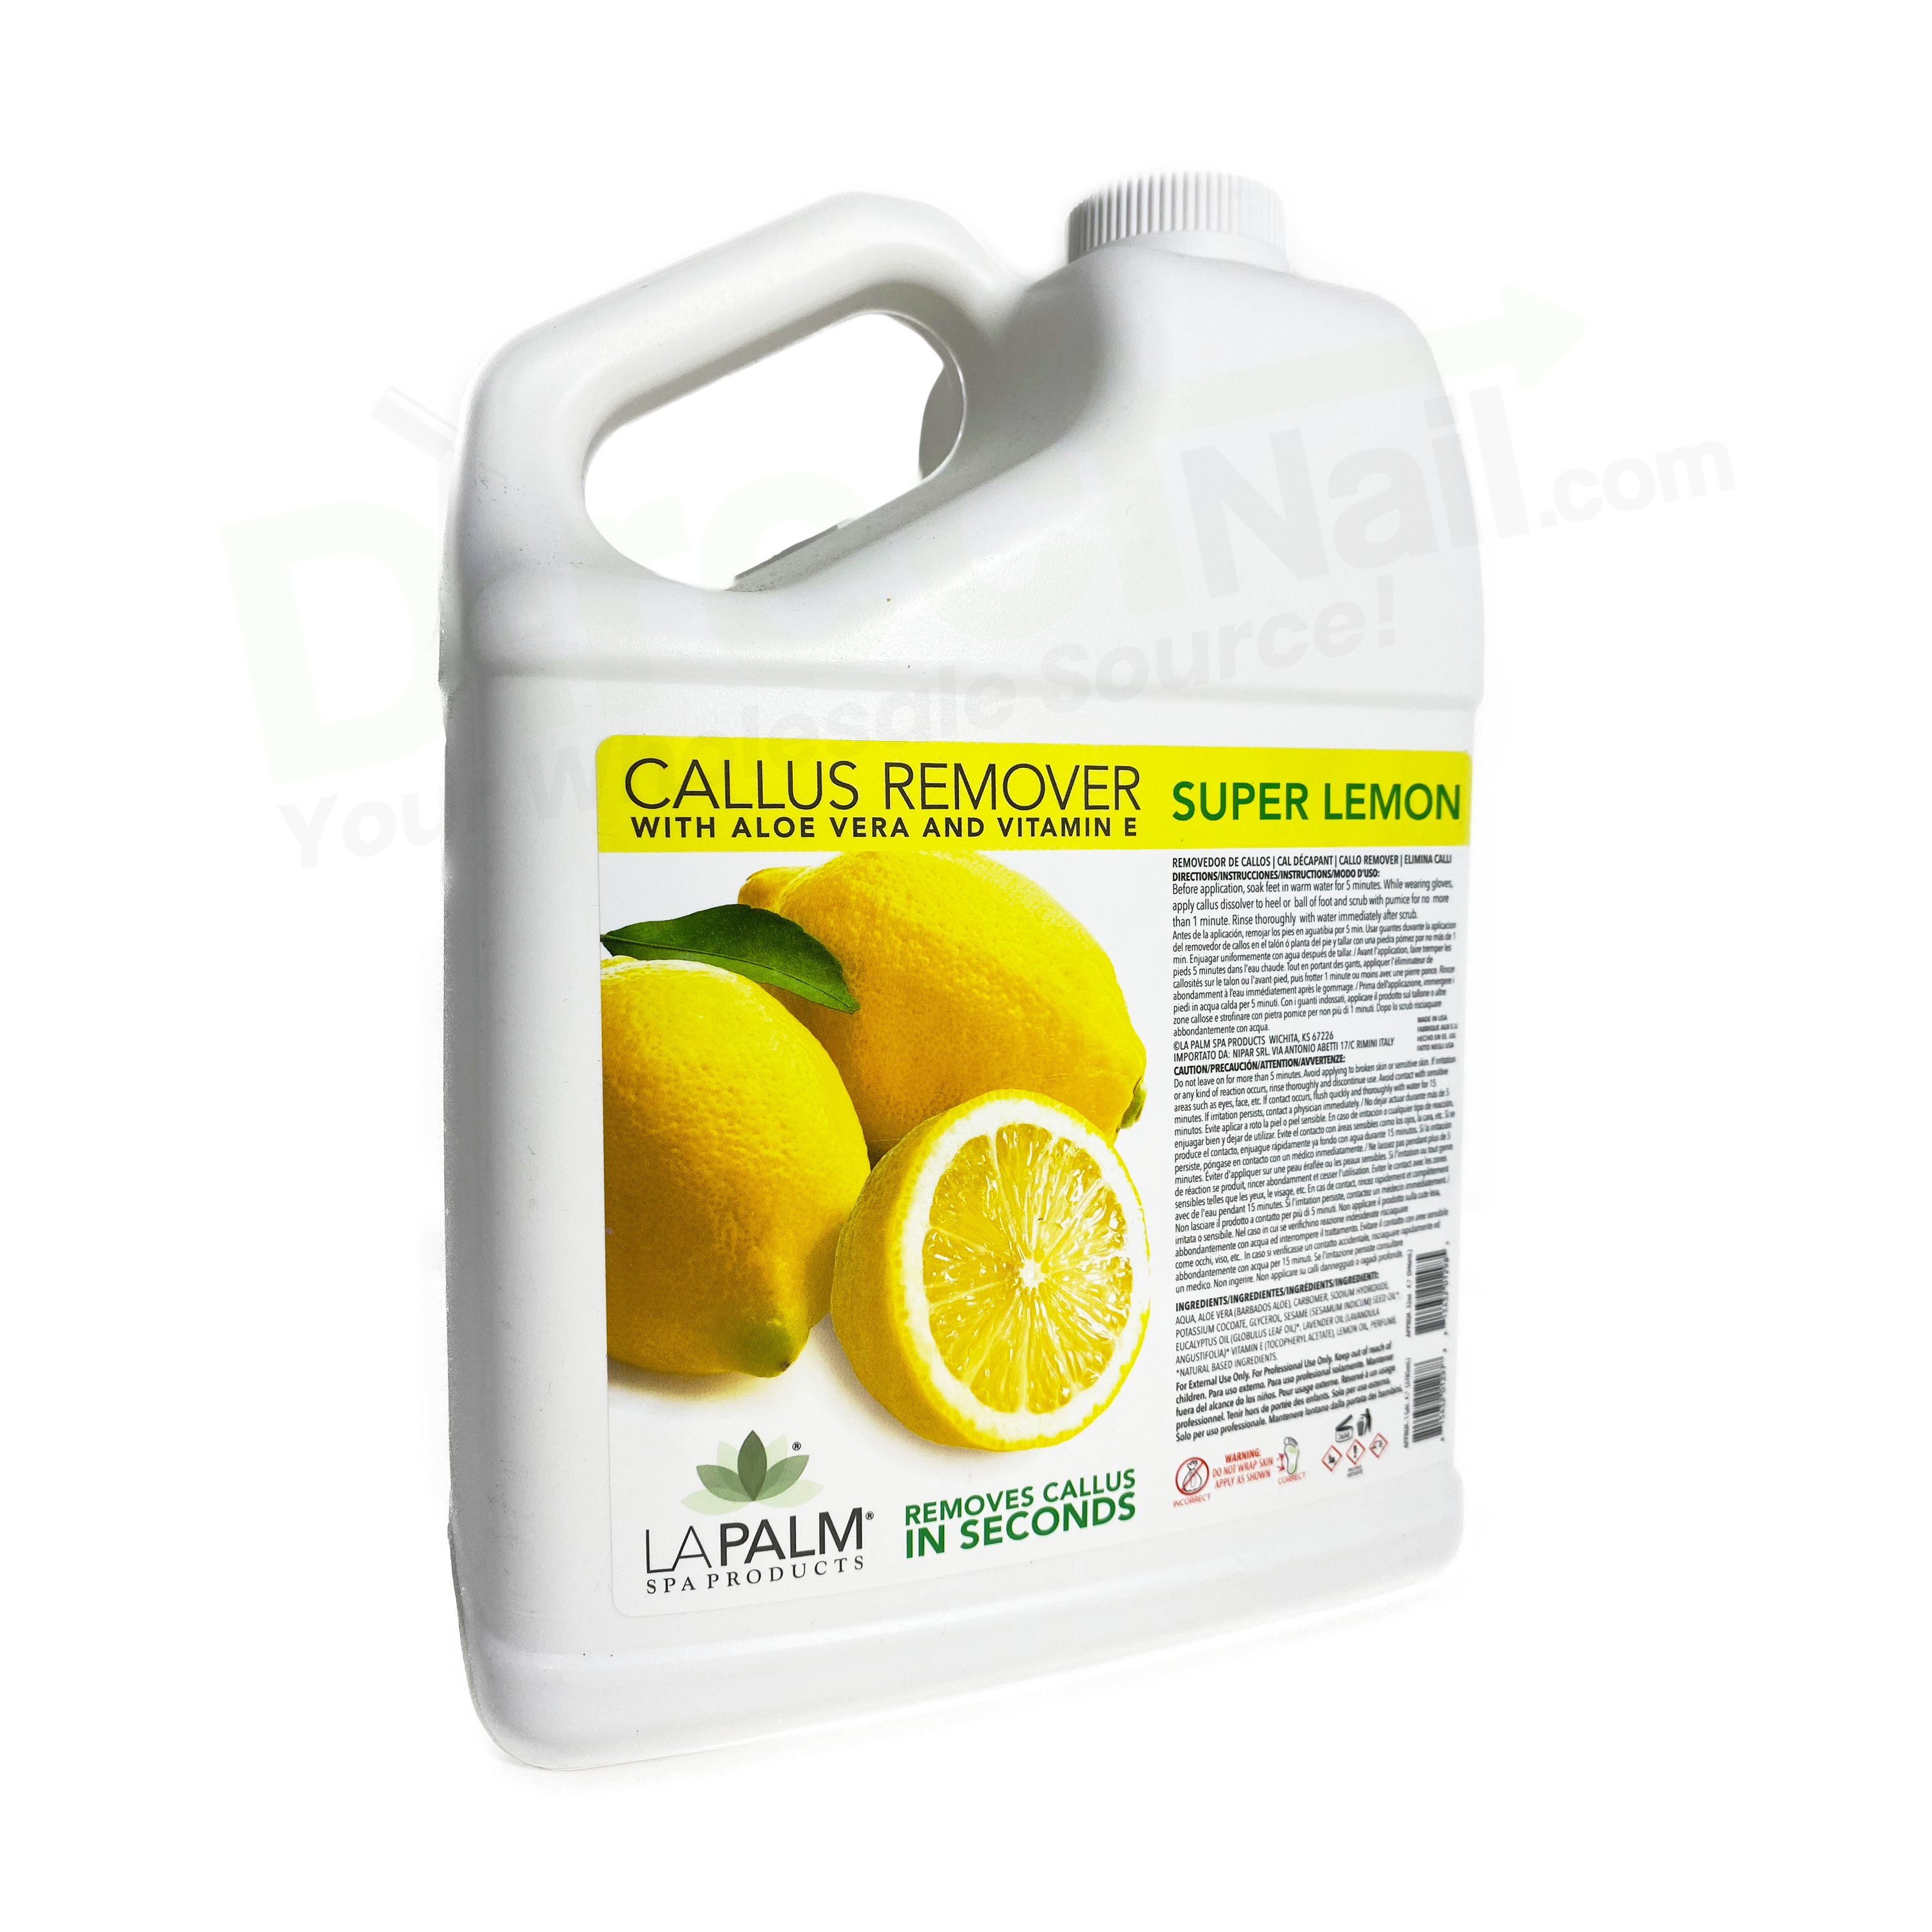 Callus Remover Gel, Green Tea Aroma (1 Gallon)